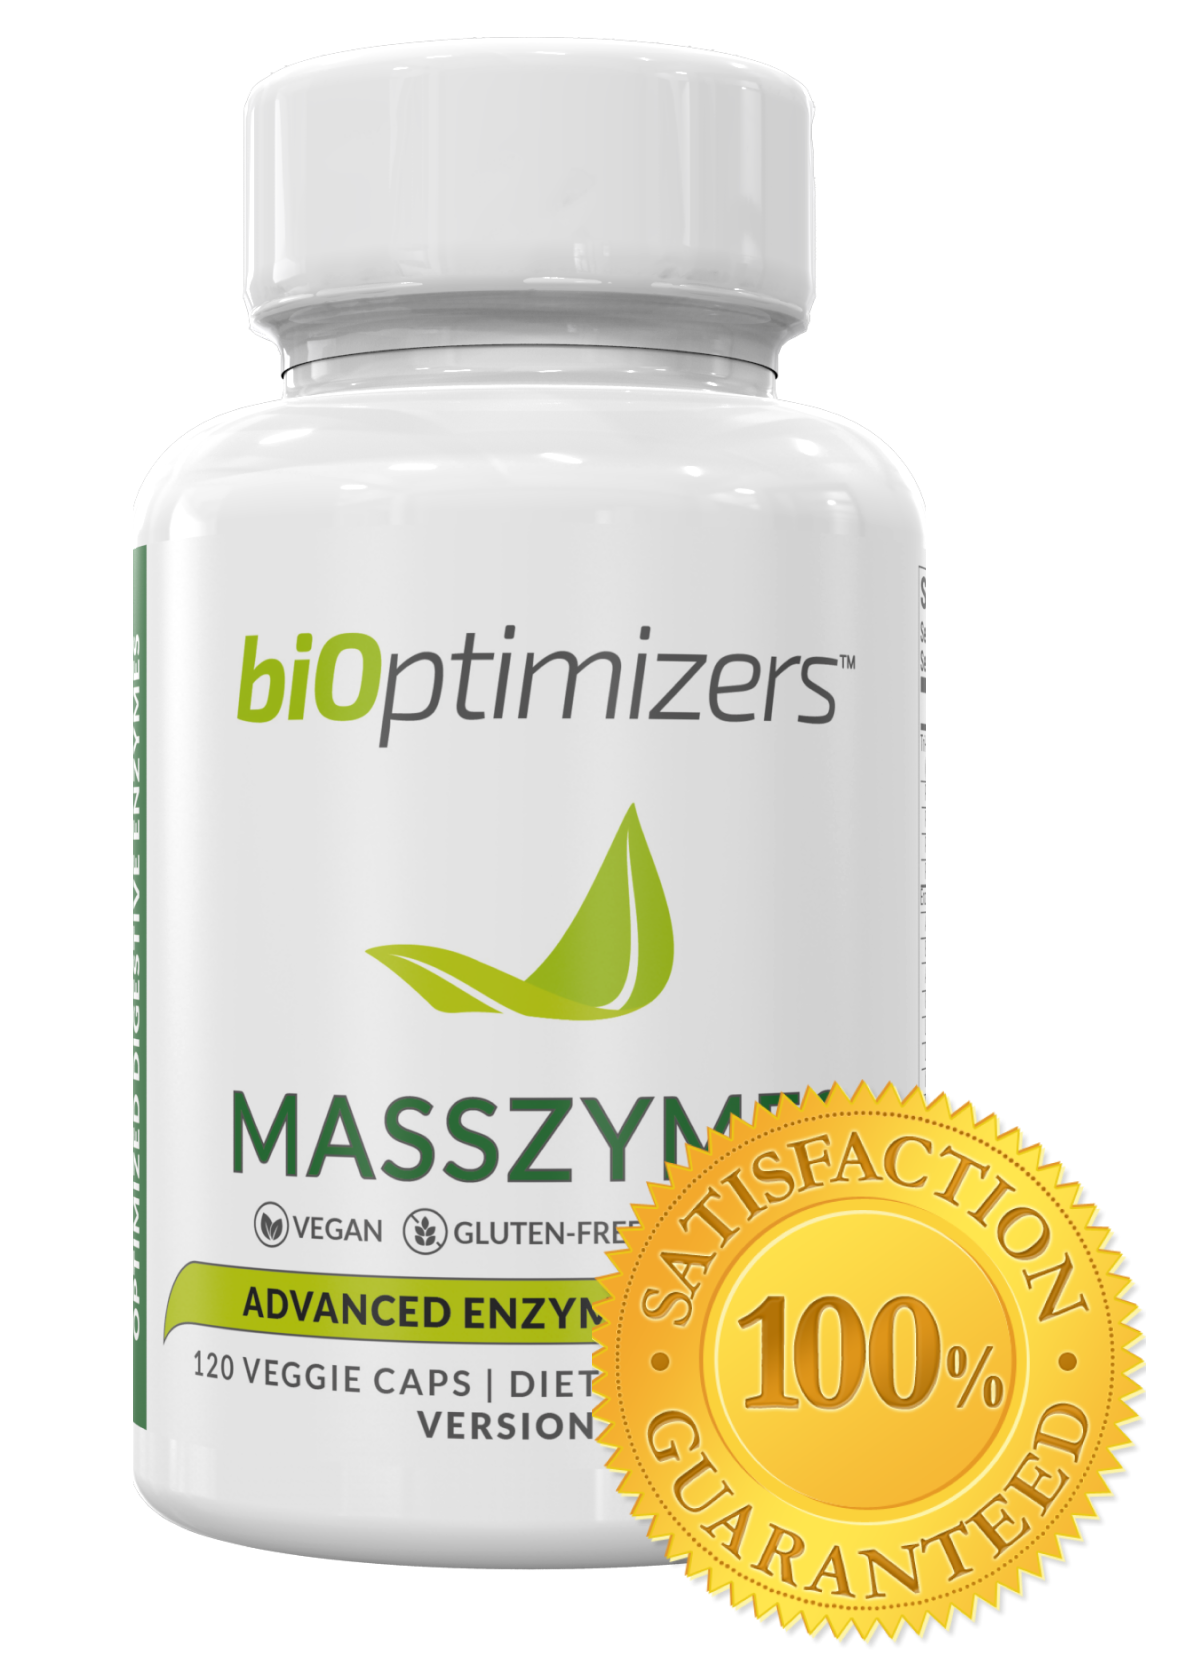 Bioptimizers Fat Loss Supplements